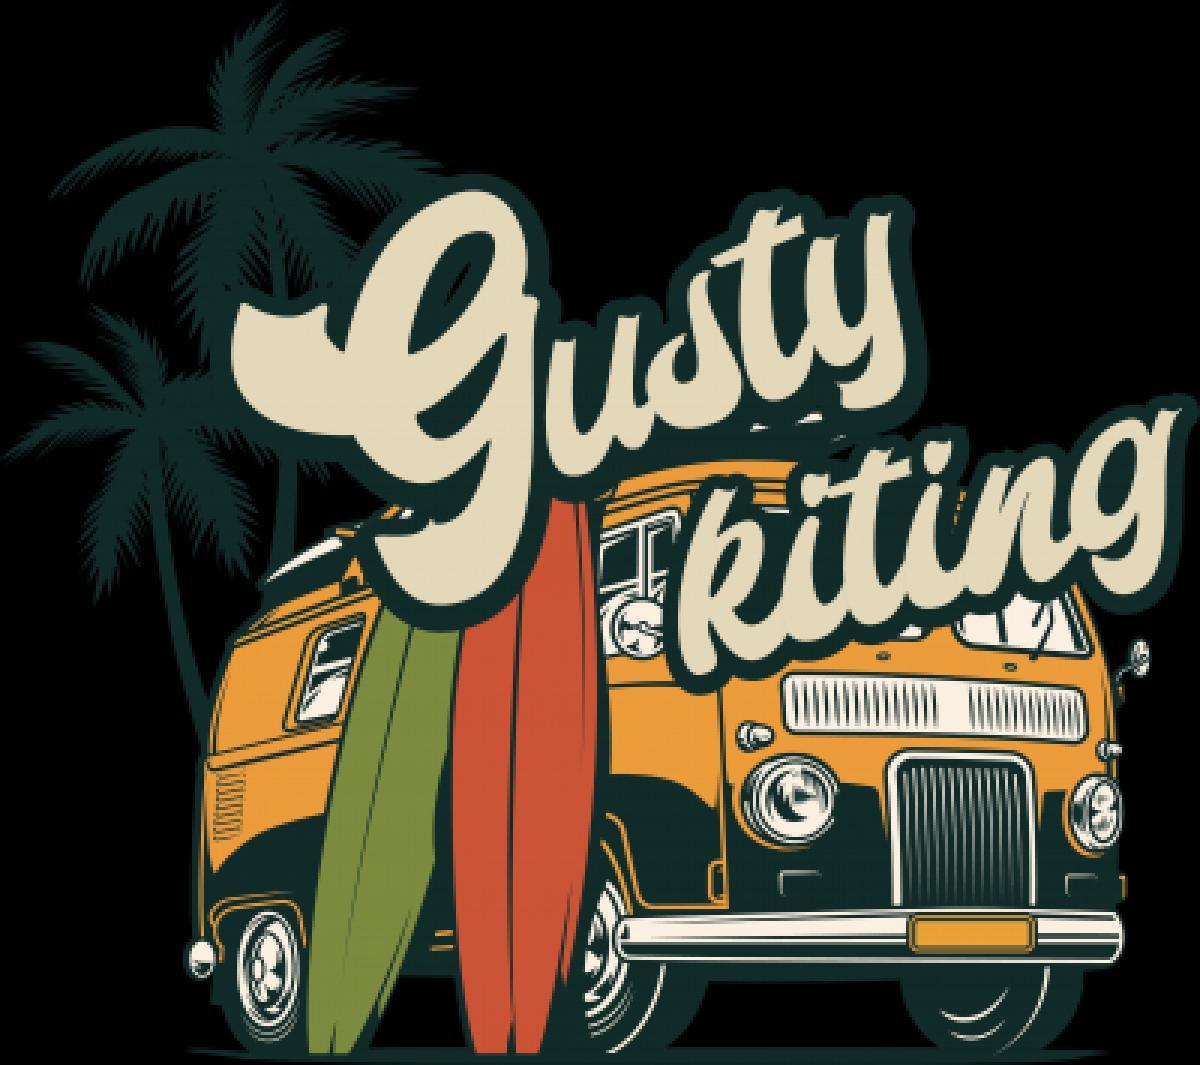 Gusty Kiting School-32-2.jpg